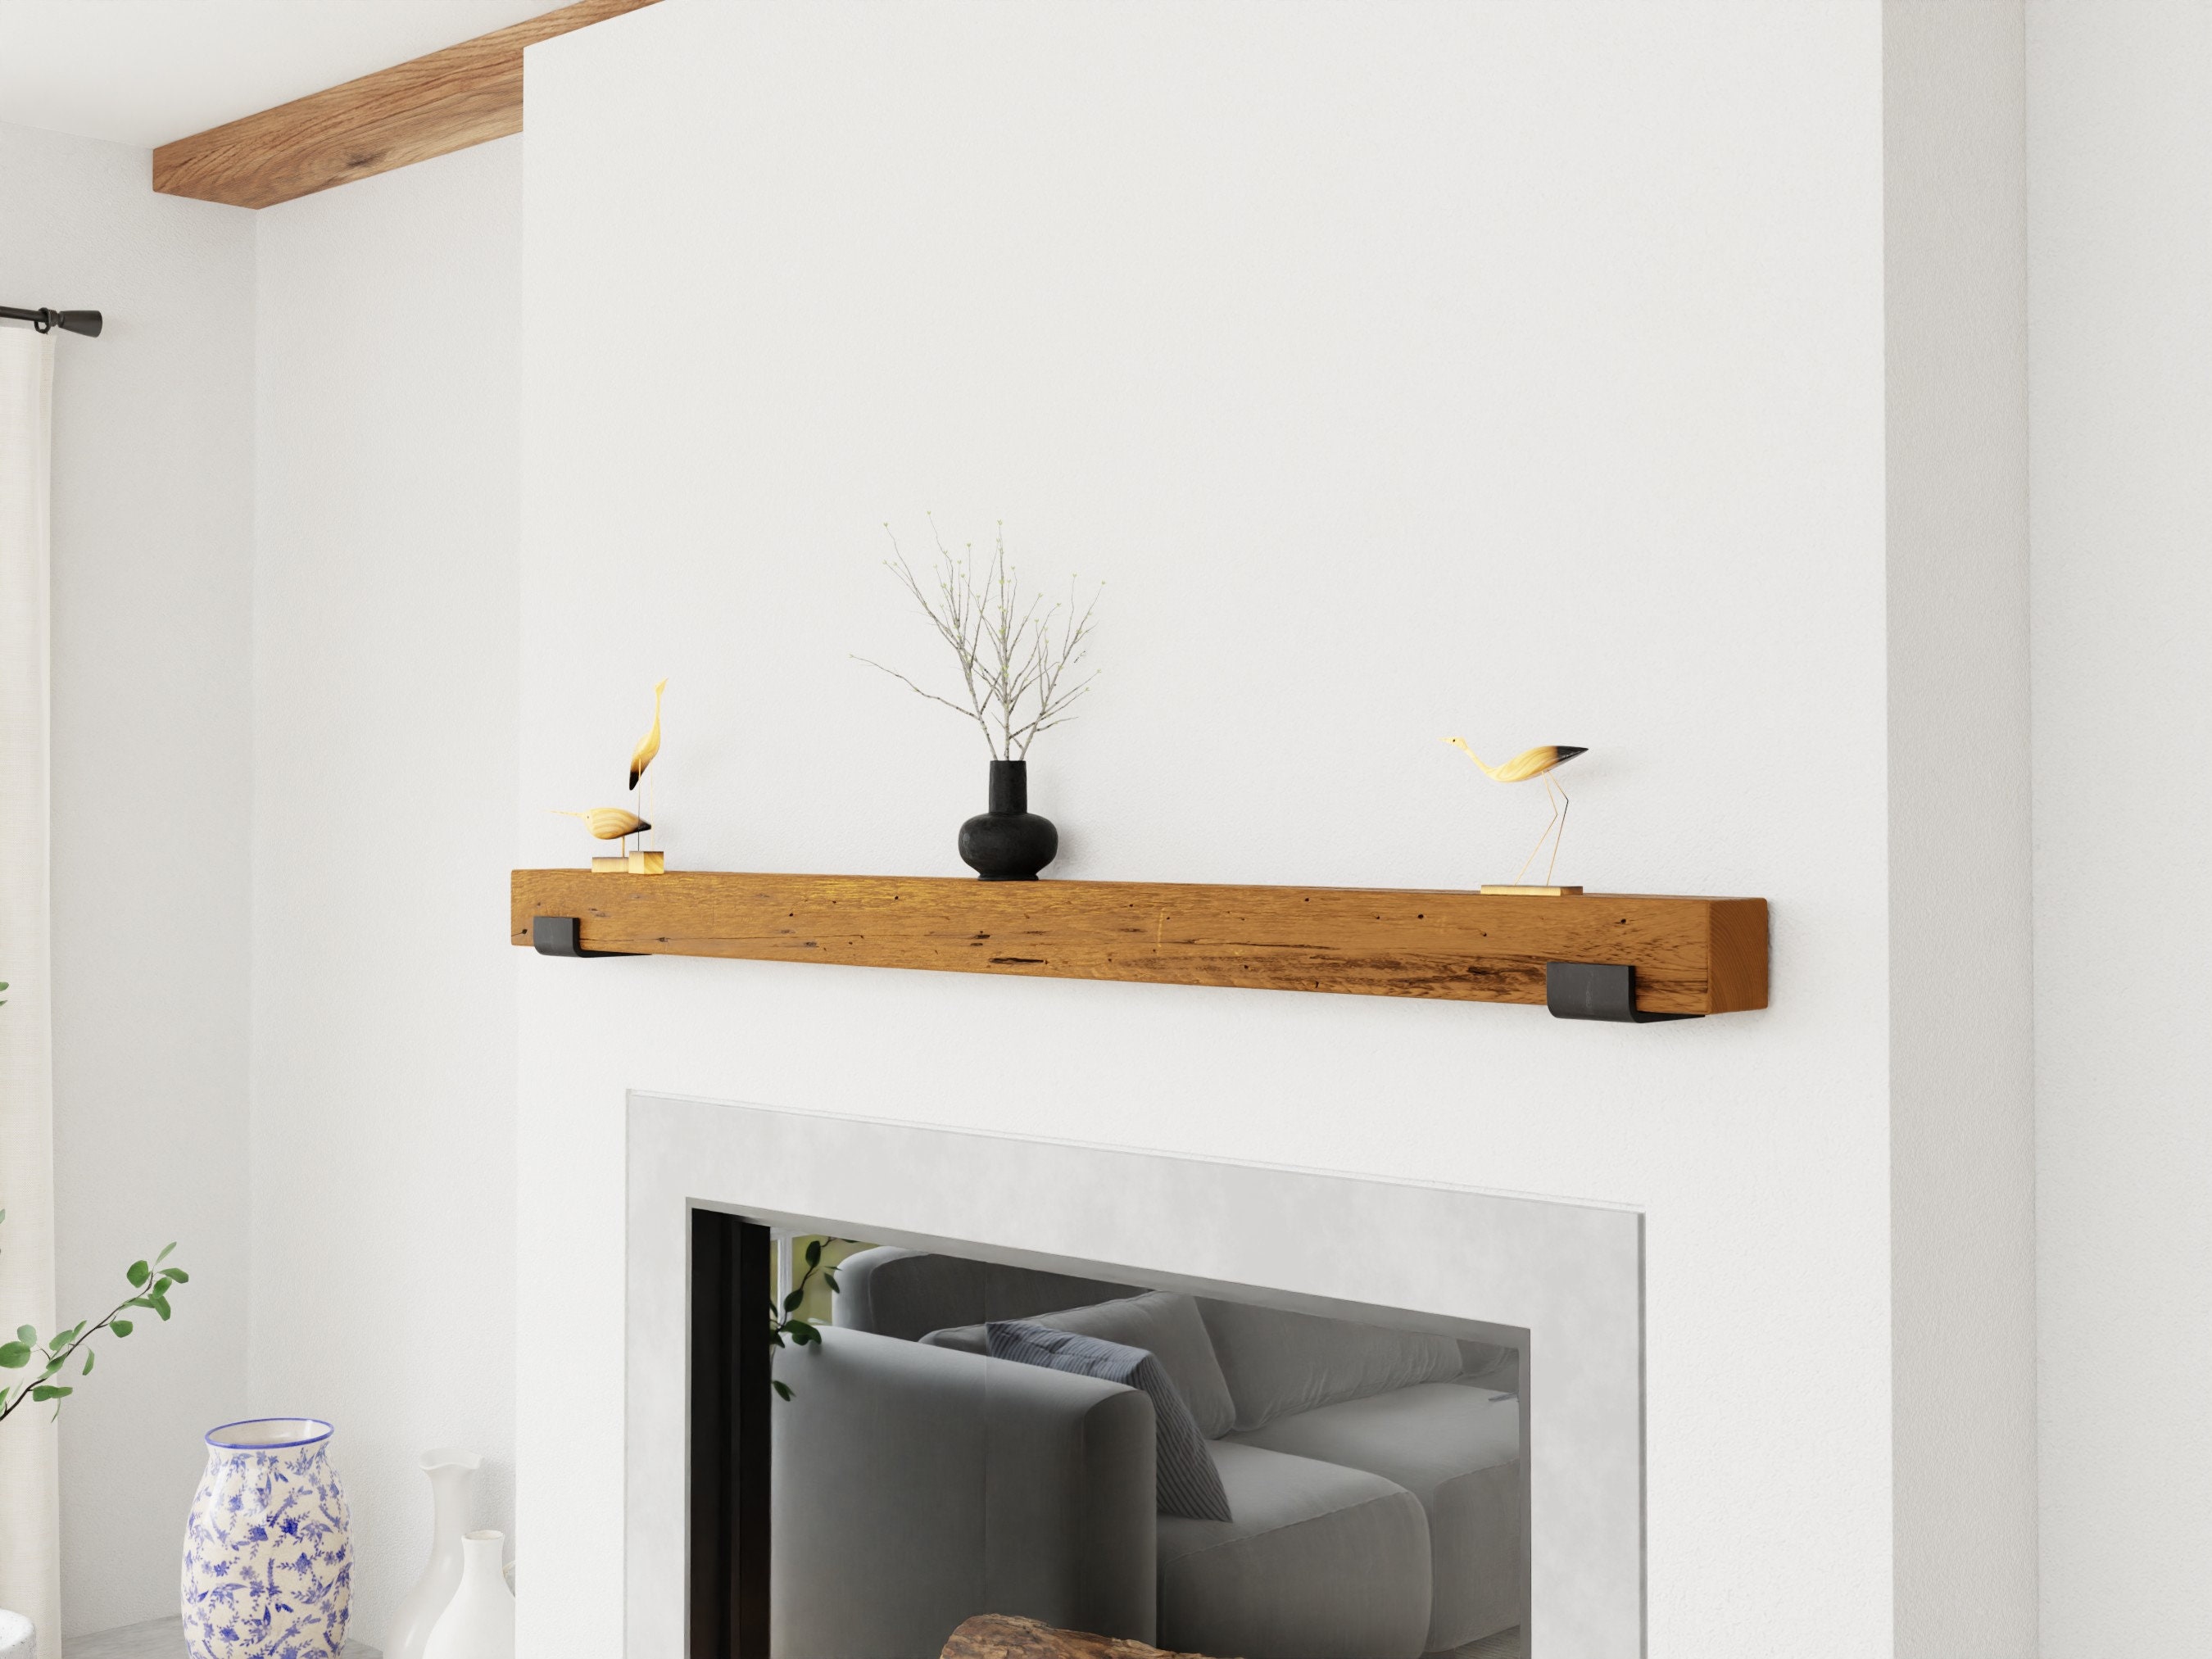 Reclaimed Barn Wood Fireplace Mantel Shelves - 3x5 – Modern Timber